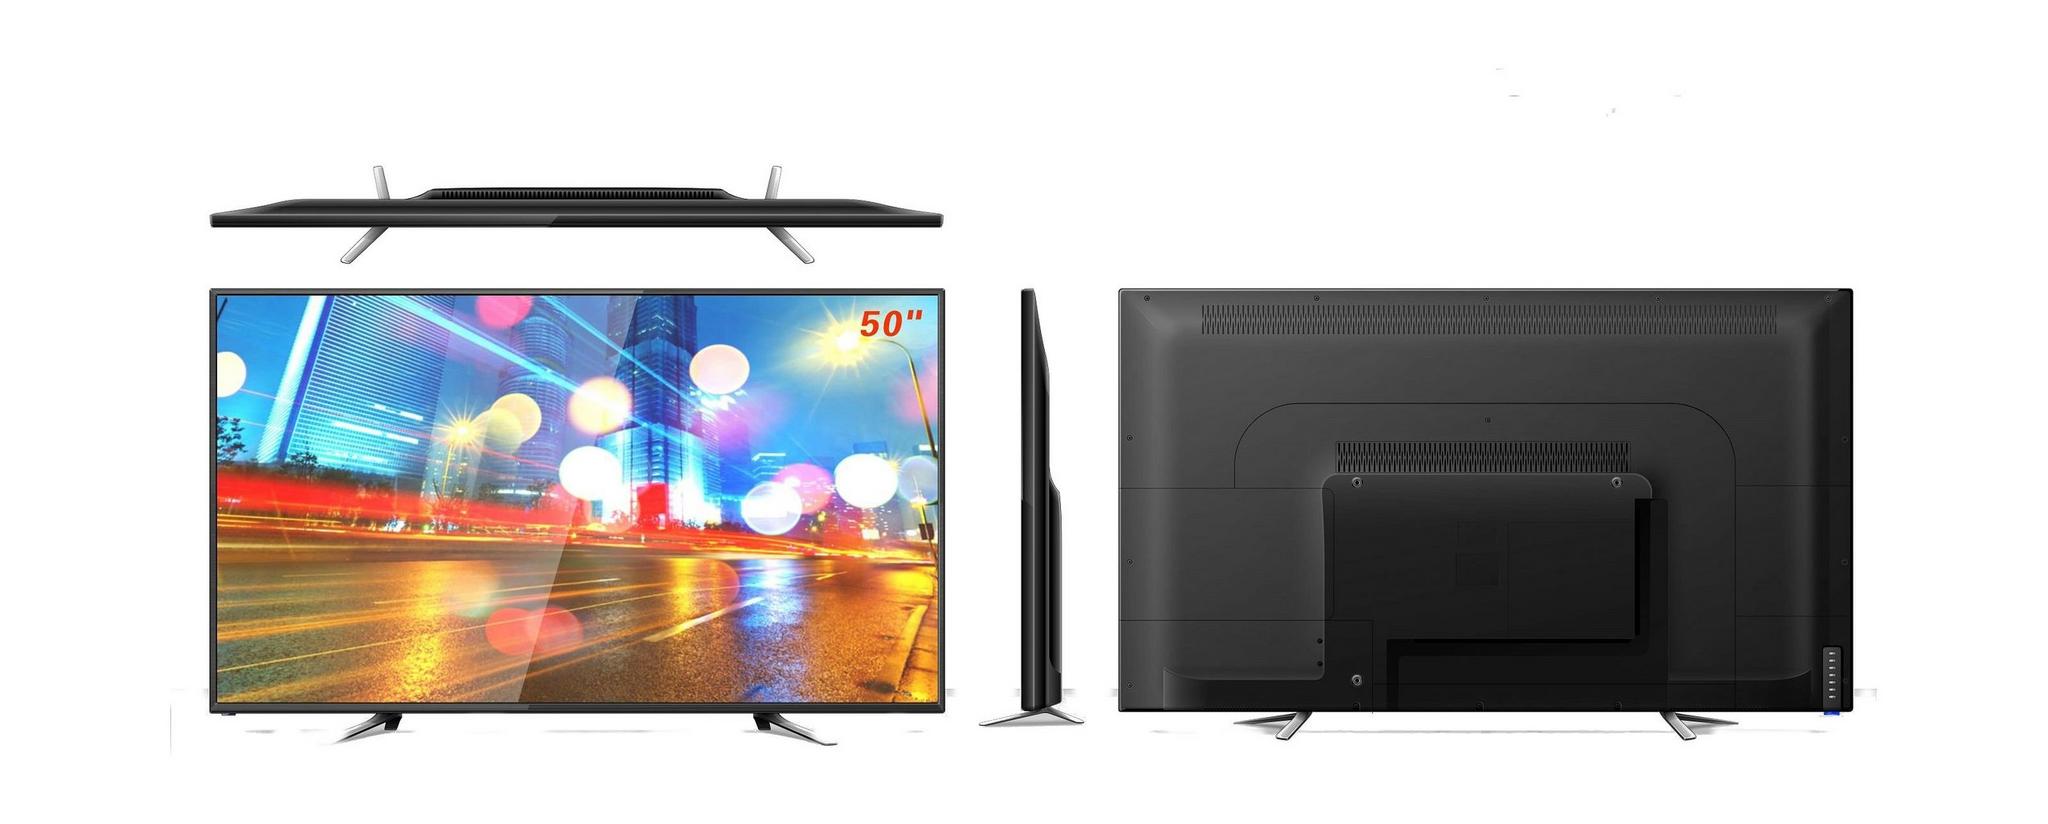 WANSA 50 inch Full HD Smart LED TV - WLE50F7762SN